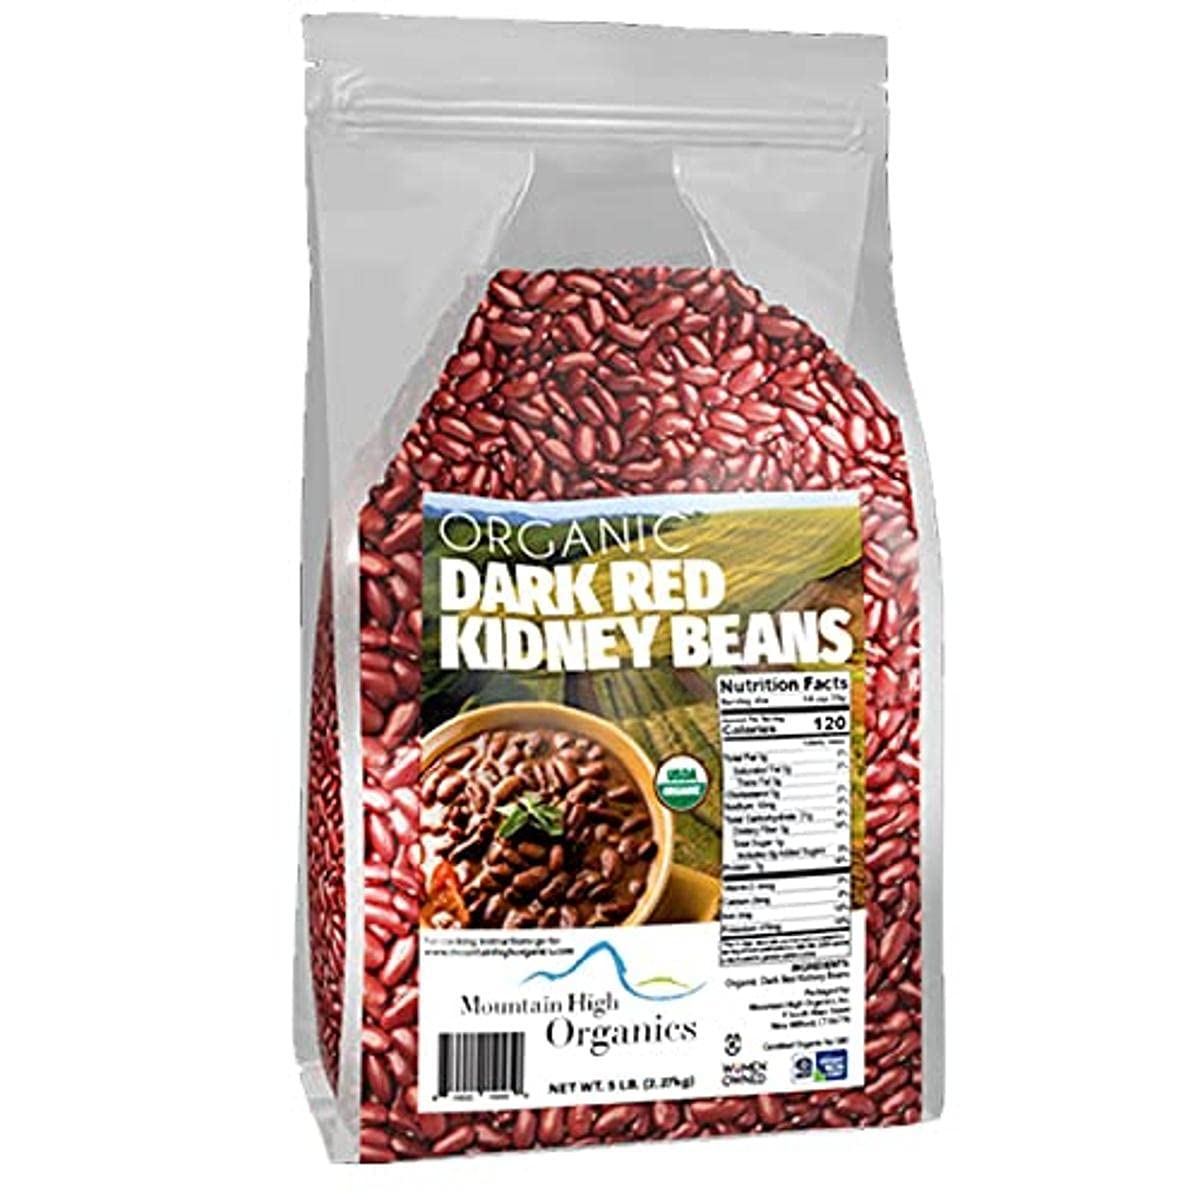 Mountain High Organics Certified Organic Dark Red Kidney Beans 1/5LB Bag